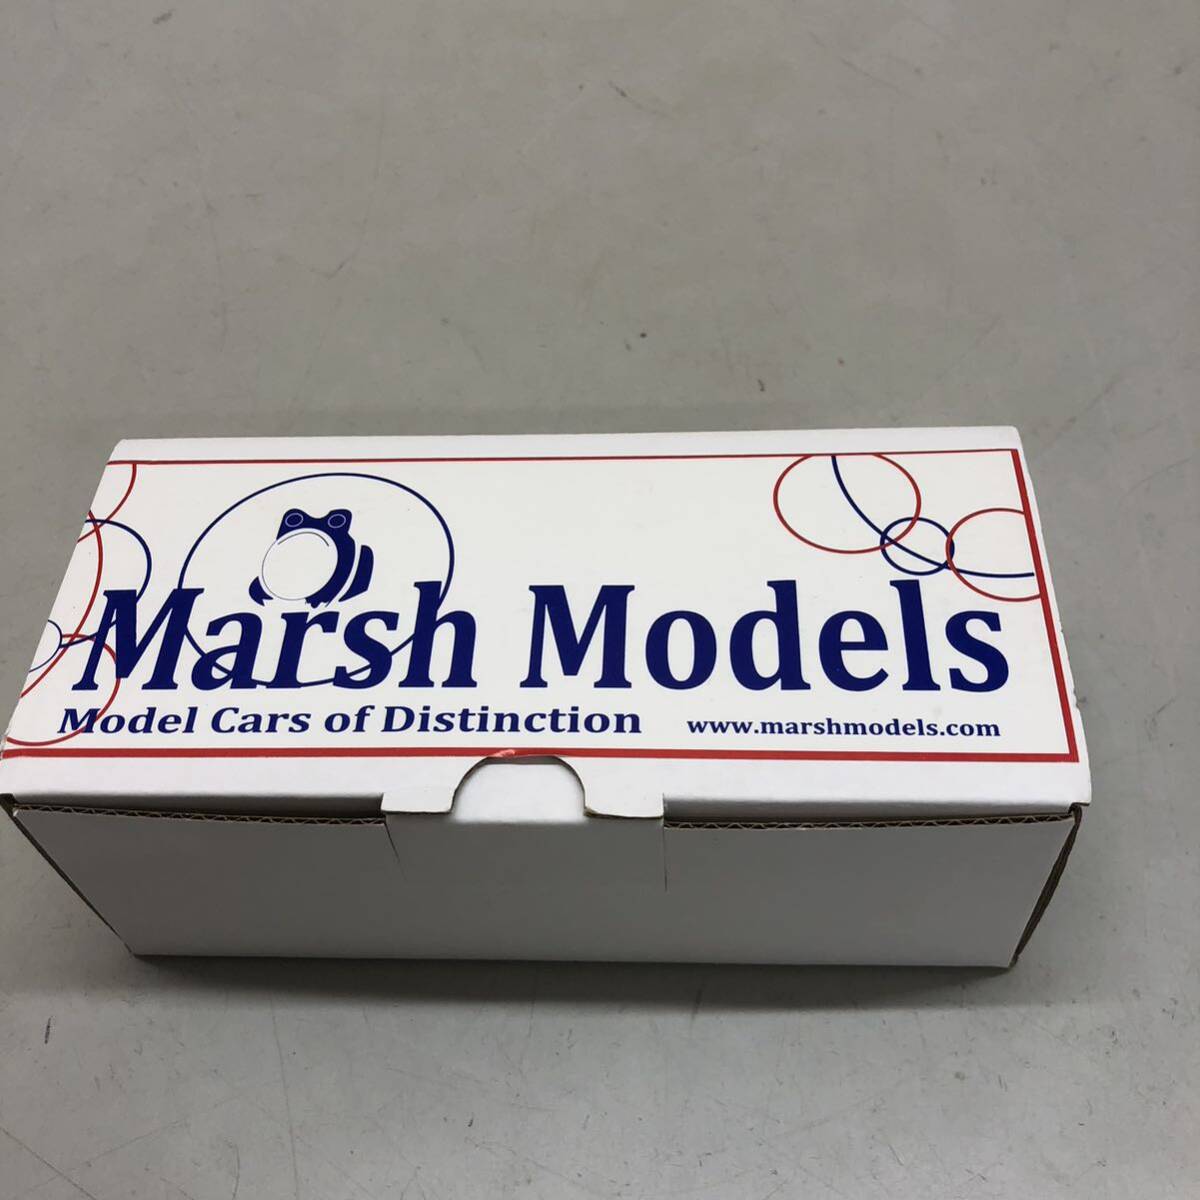 18 Marsh Models MM159 Chanparal2 Mosport 1965 未開封 ガレージキット の画像1